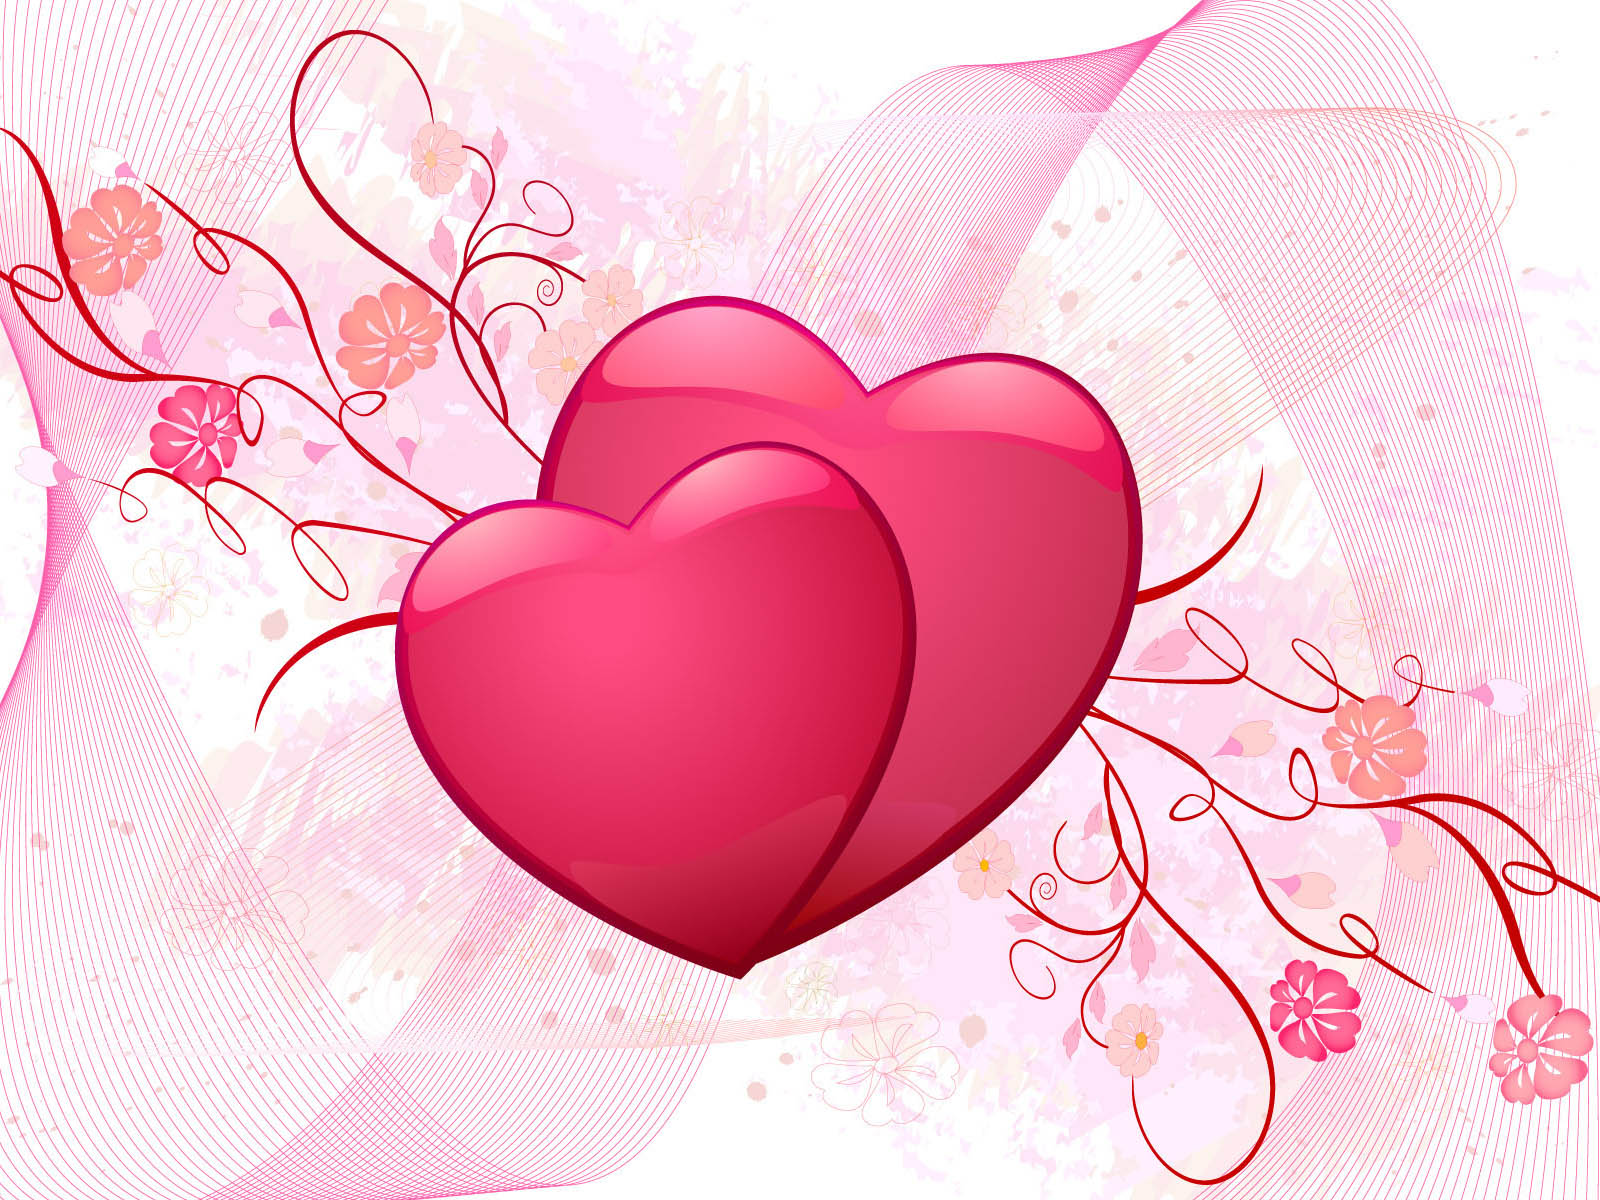 Heart Love Wallpaper Image